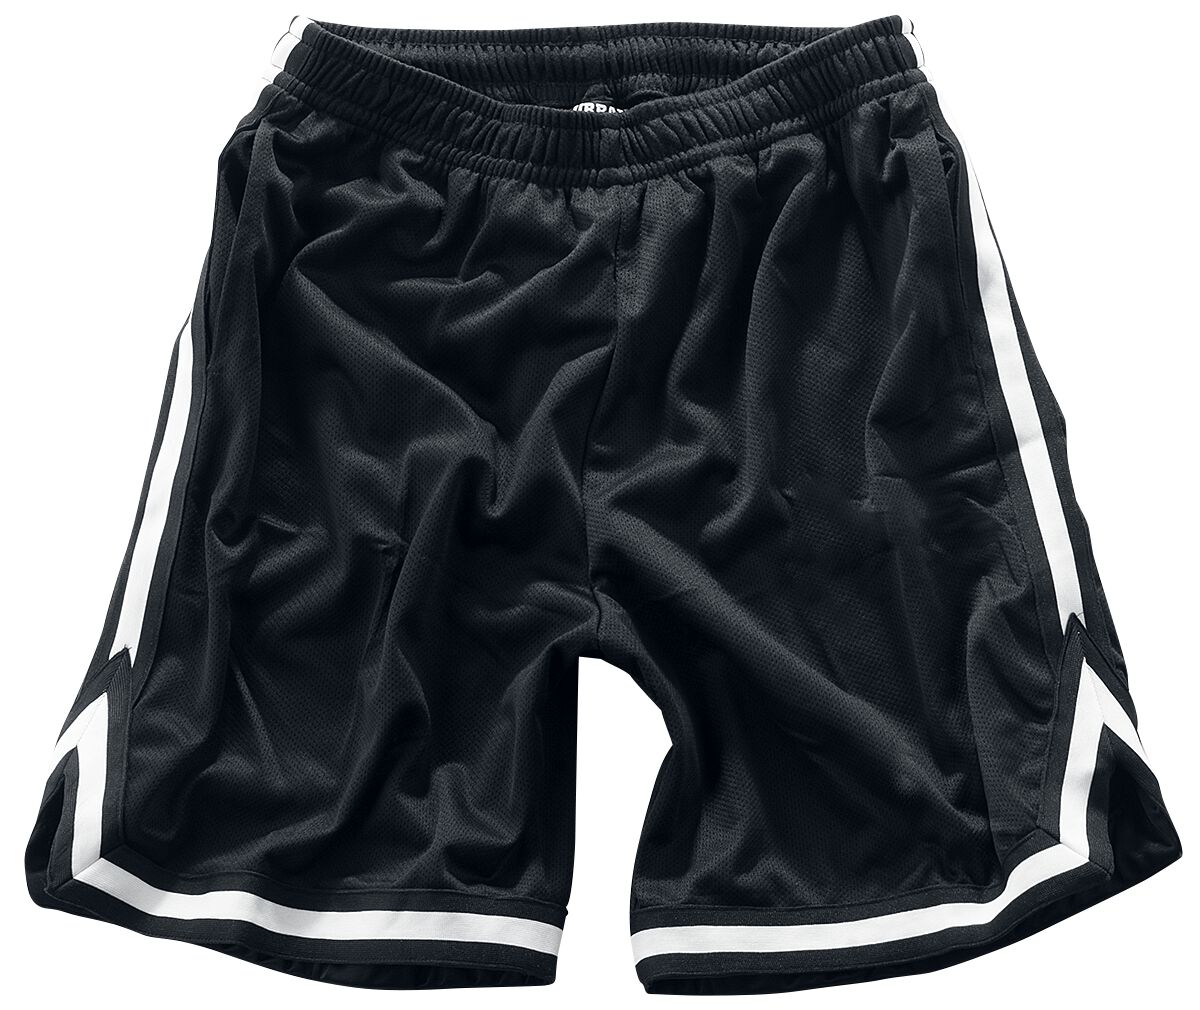 Urban Classics Stripes Mesh Shorts Short schwarz weiß in XL